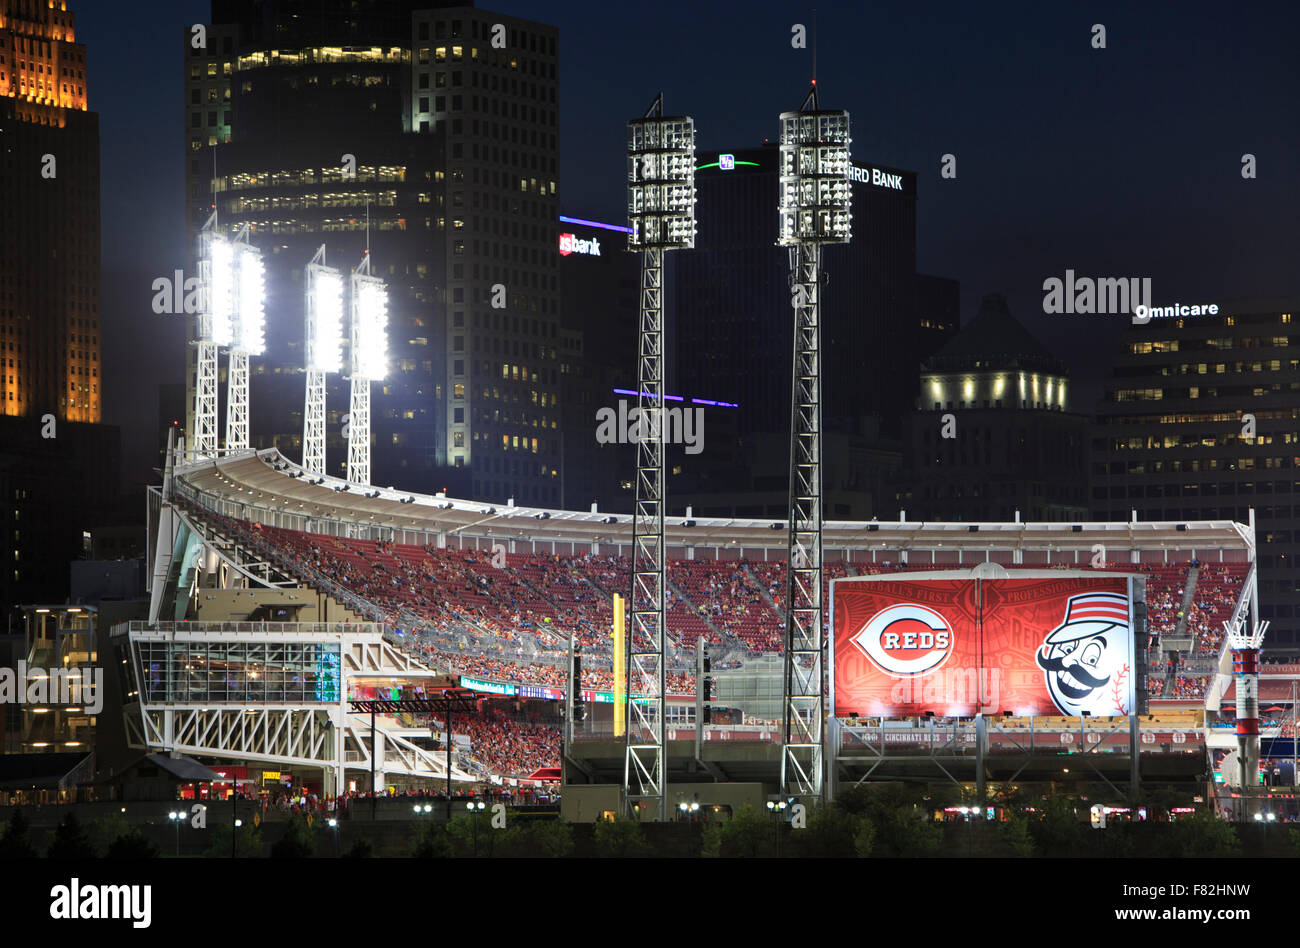 Great American Ball Park, casa dei Cincinnati Reds (American Professional squadra di baseball). Foto Stock